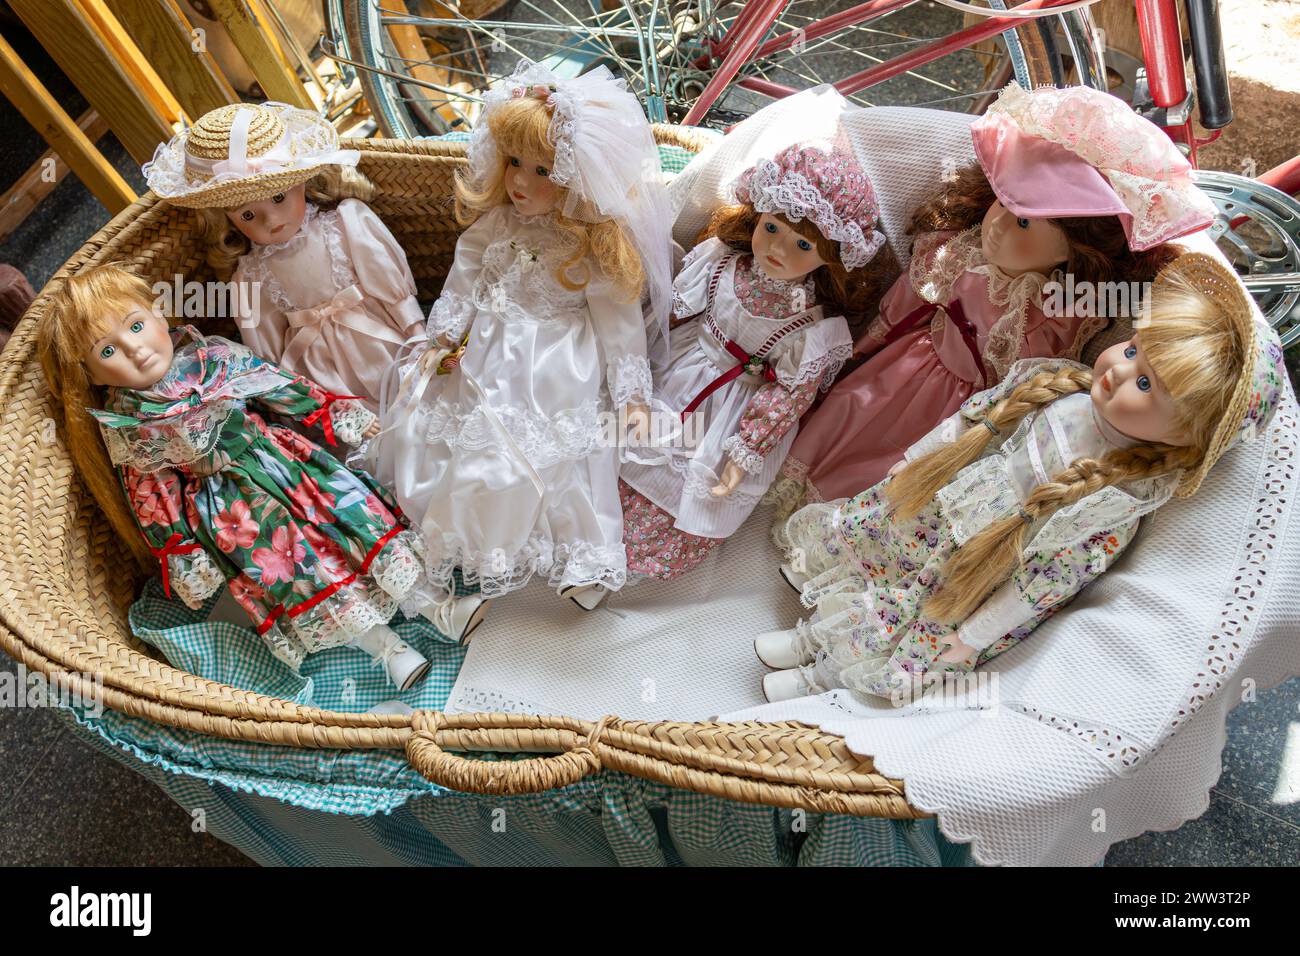 antique porcelain dolls in blue wicker cradle, in the shop window Stock Photo